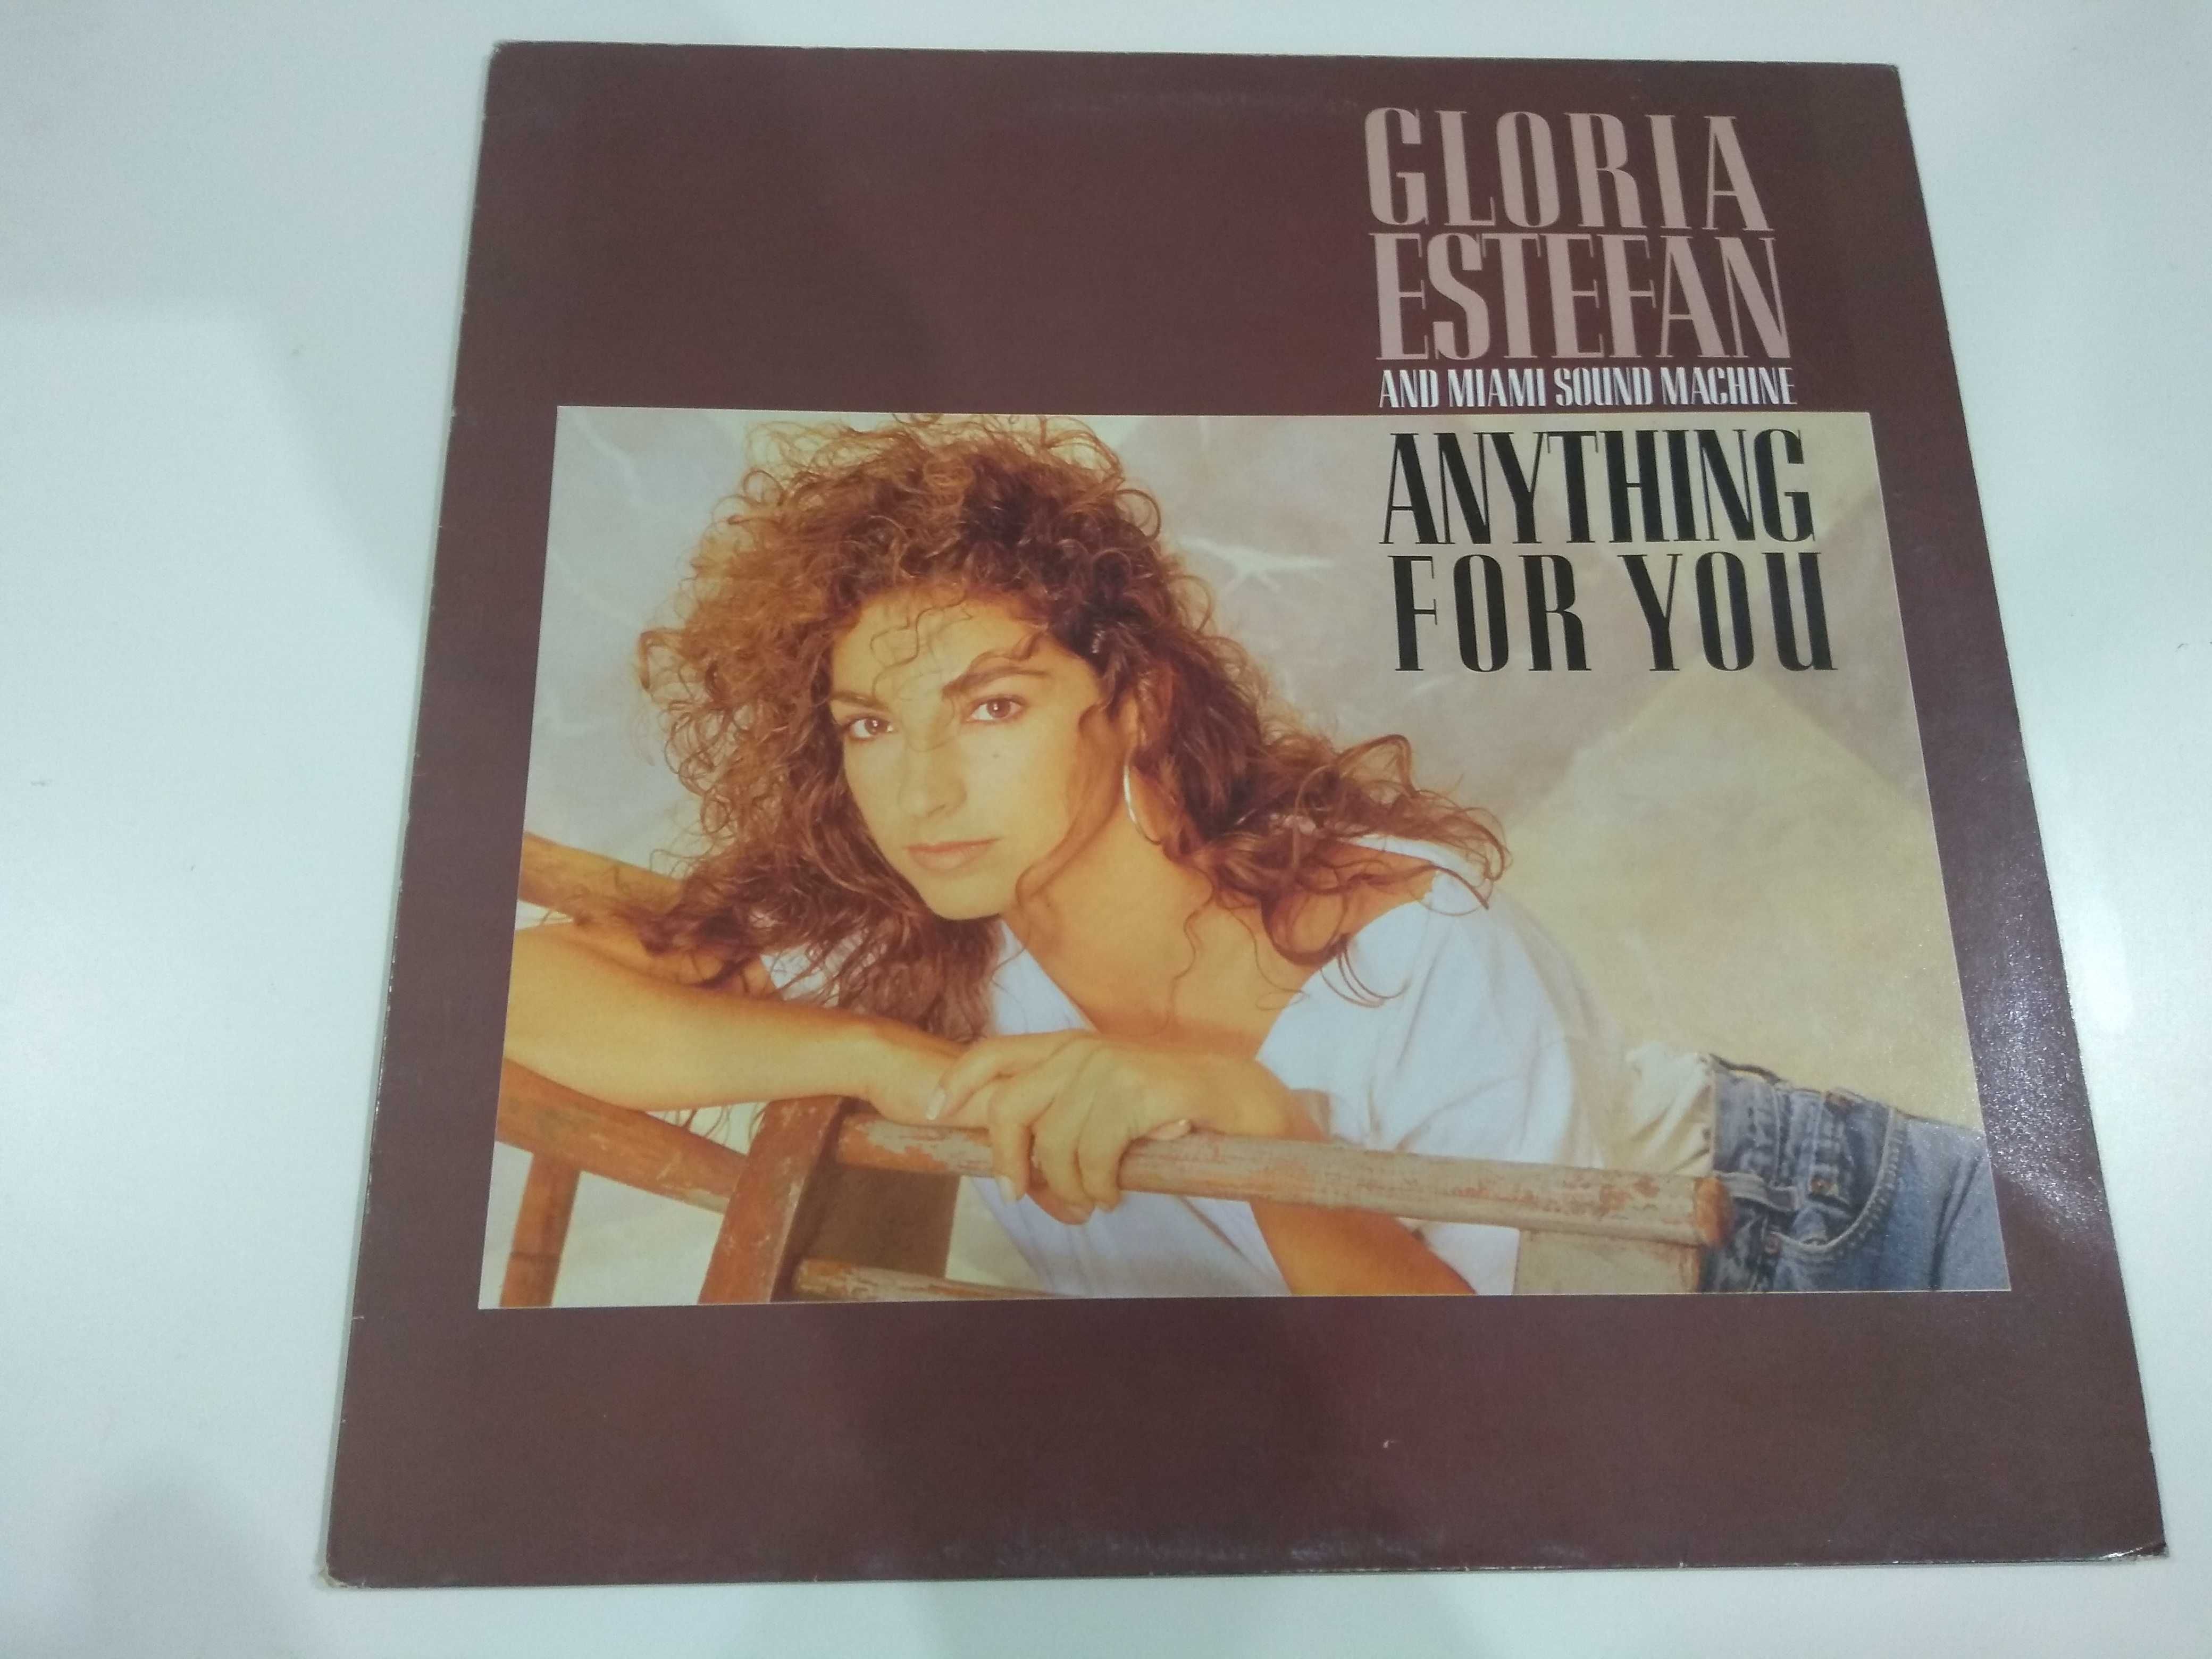 Dobra płyta - Gloria Estefan anthing for you